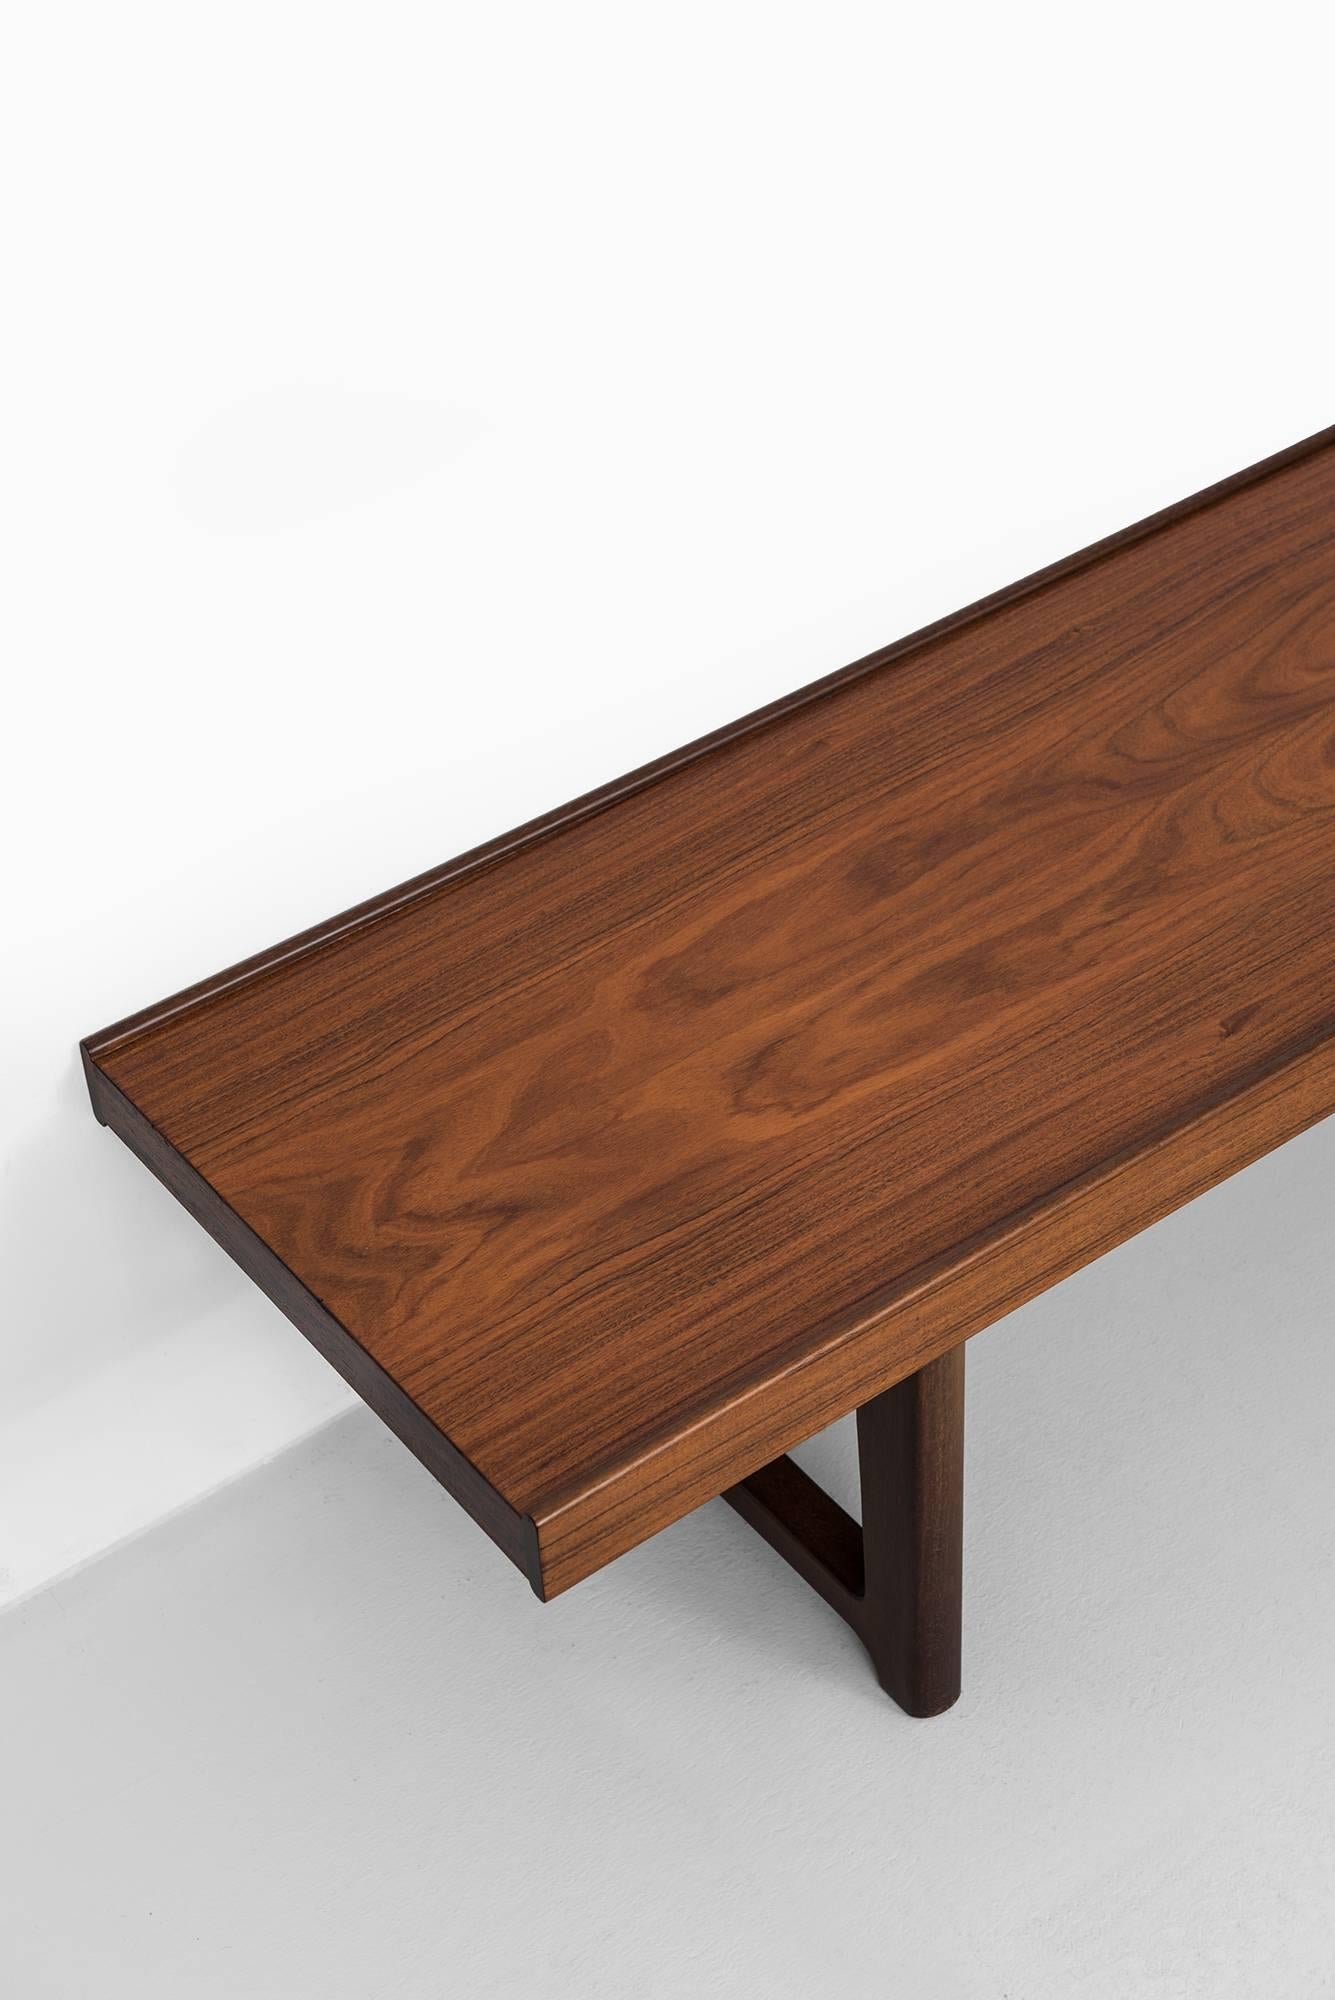 Bench/side table model Krobo designed by Torbjørn Afdal. Produced by Bruksbo in Norway.